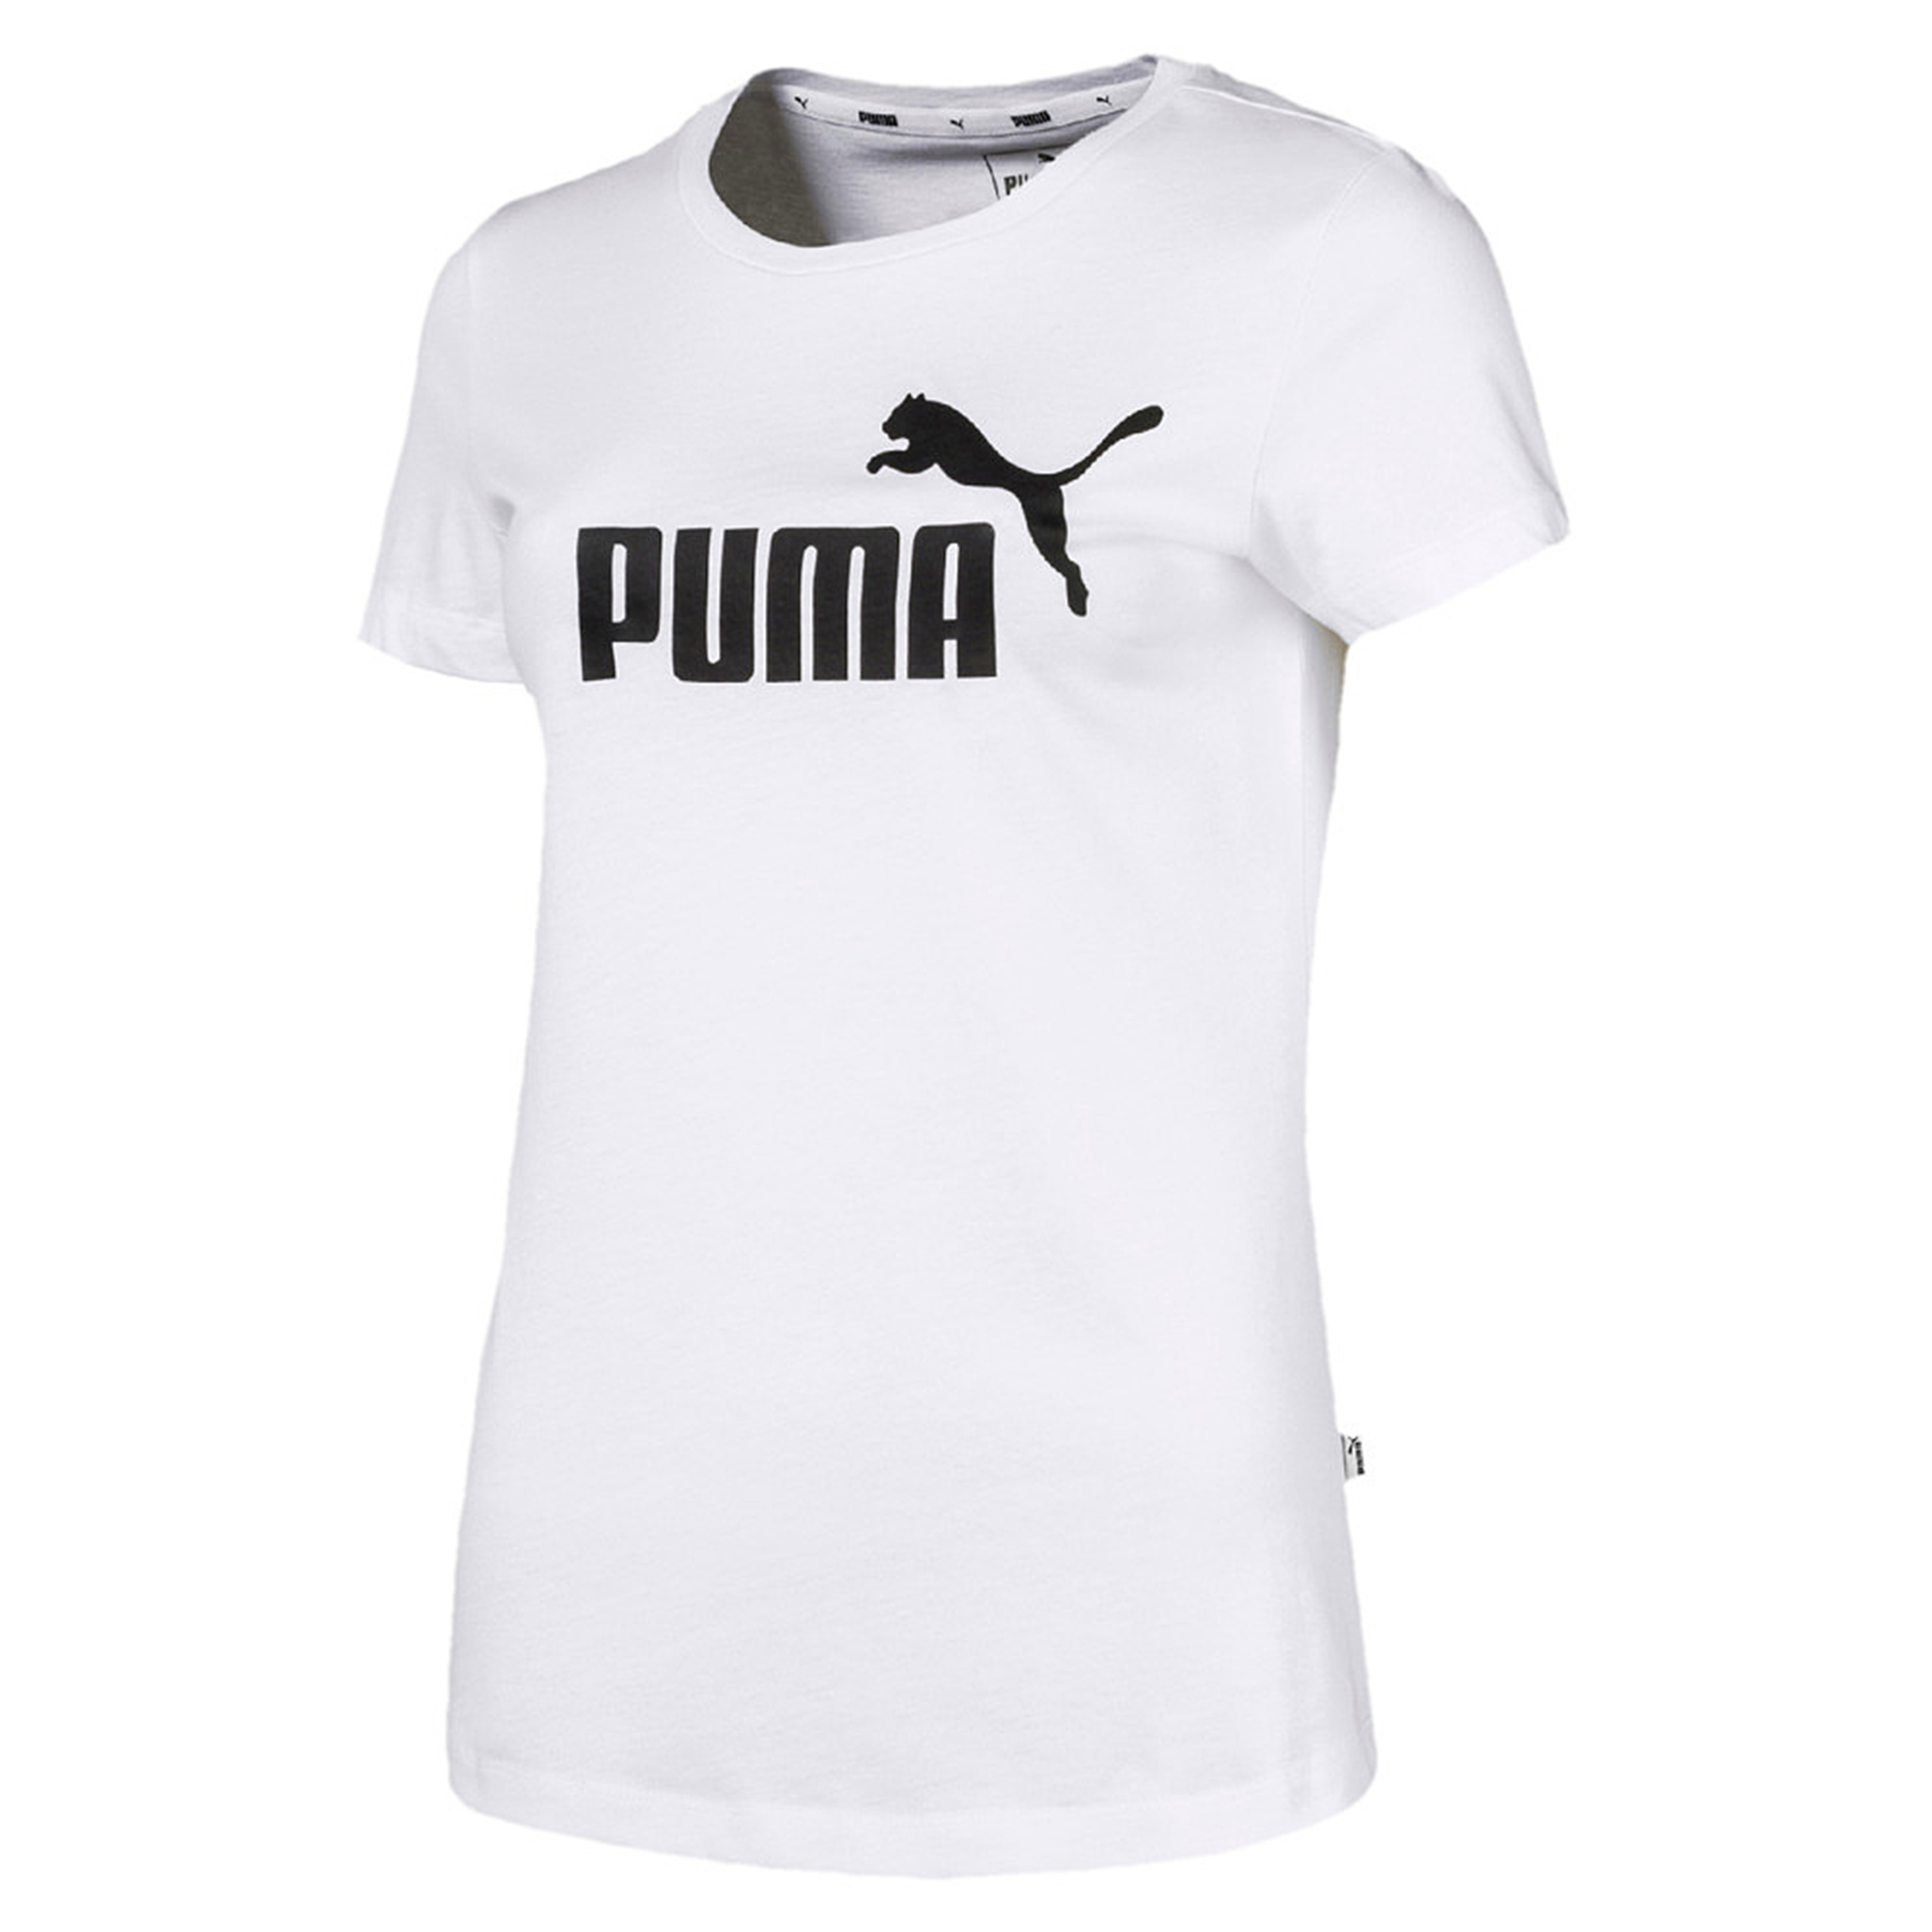 Puma Damen essential logo tee T-Shirt Weiß NEU | eBay